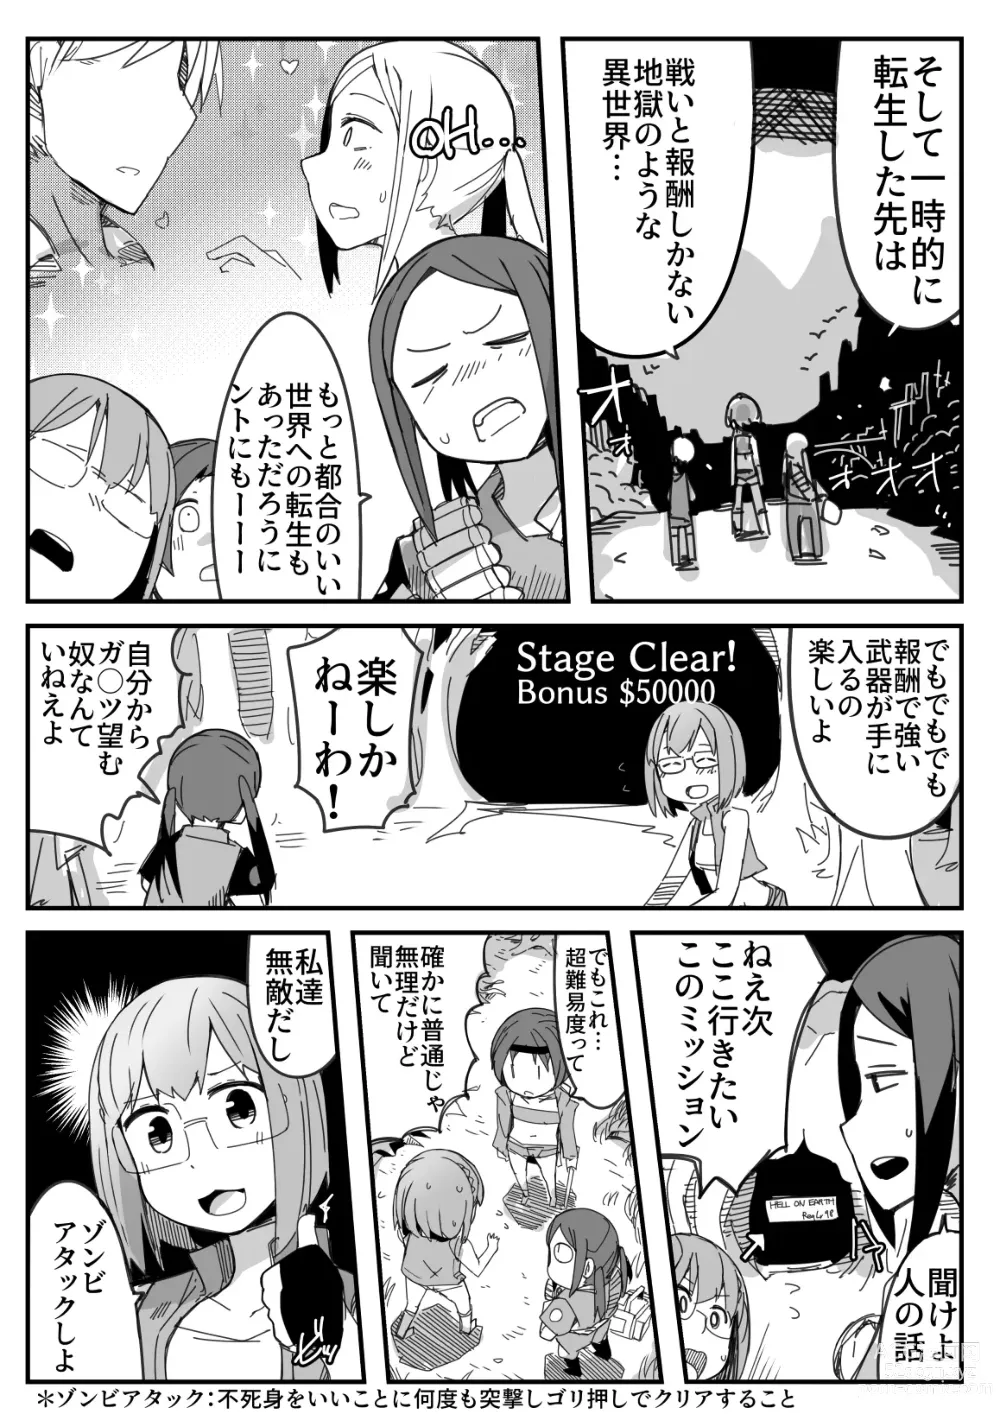 Page 5 of doujinshi Ryona no Kane 2021